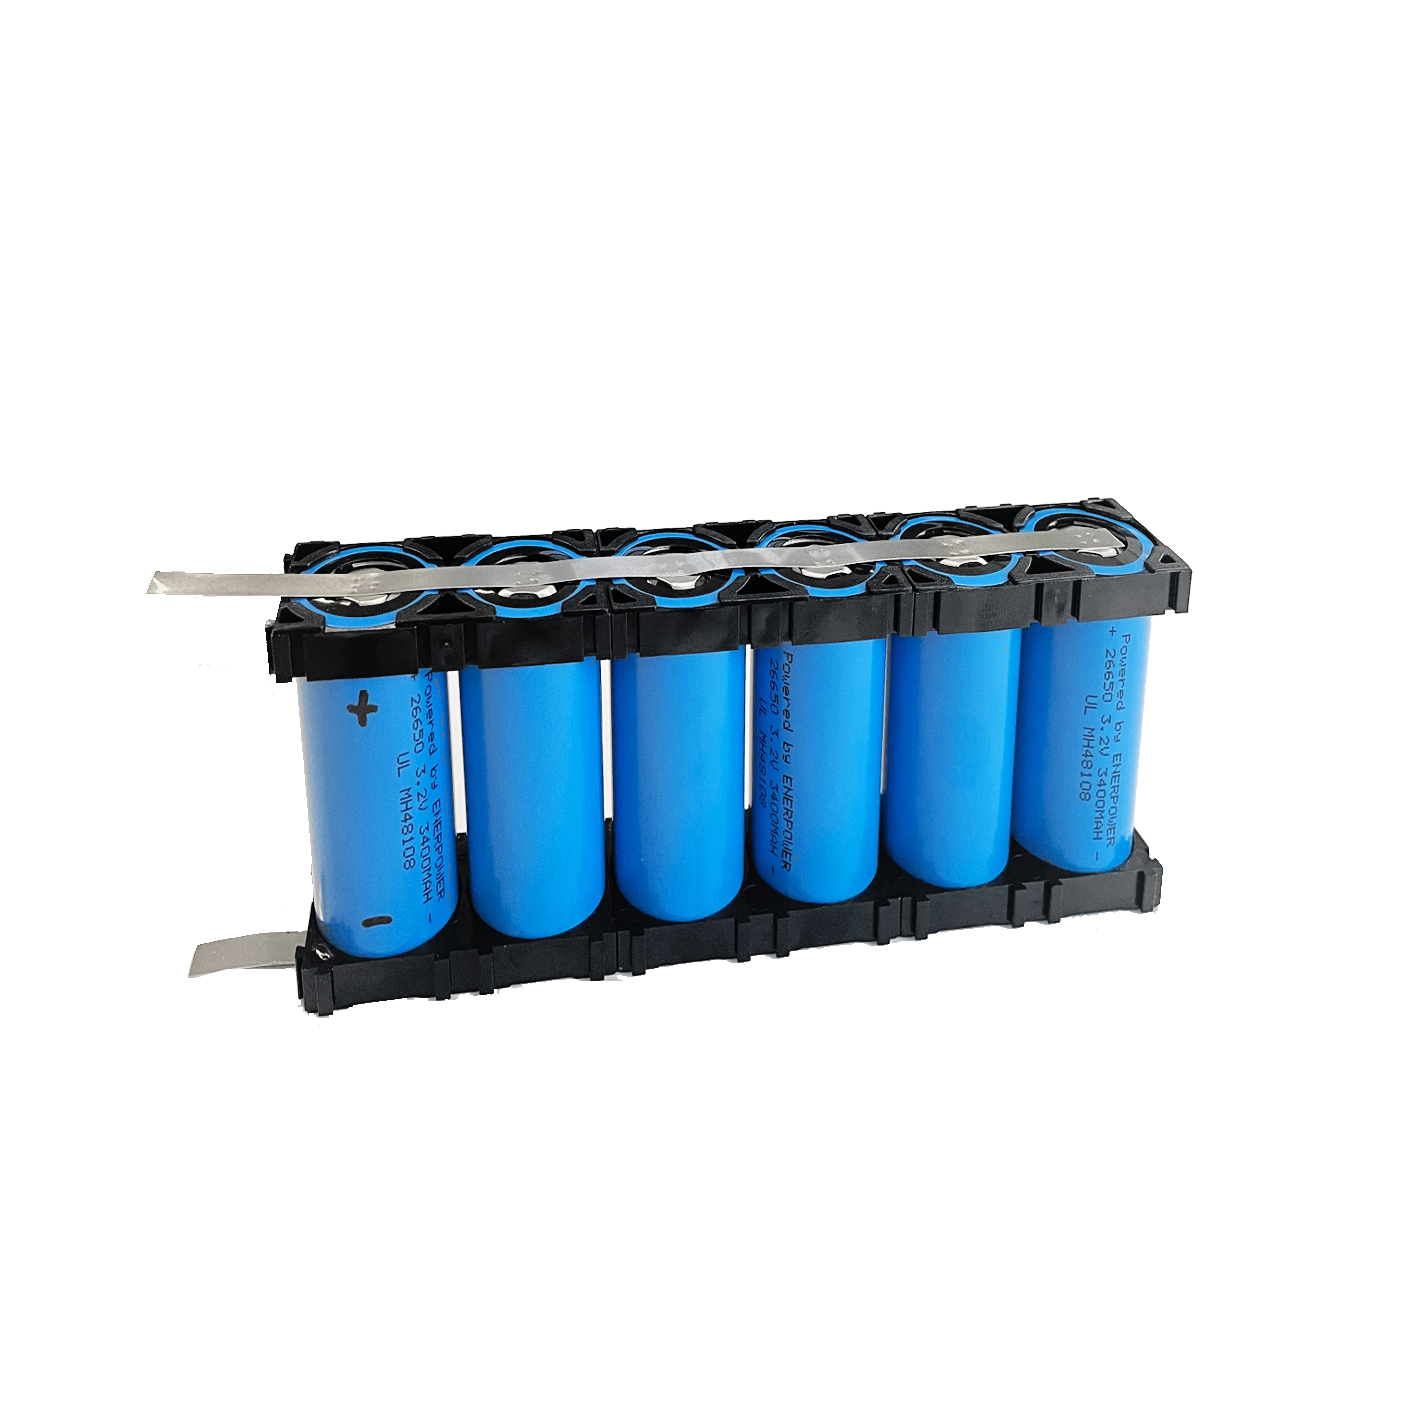 Enerpower battery module 1S6P 3.2V 20.40Ah (65.30Wh) 165 x 65 x 30 mm 